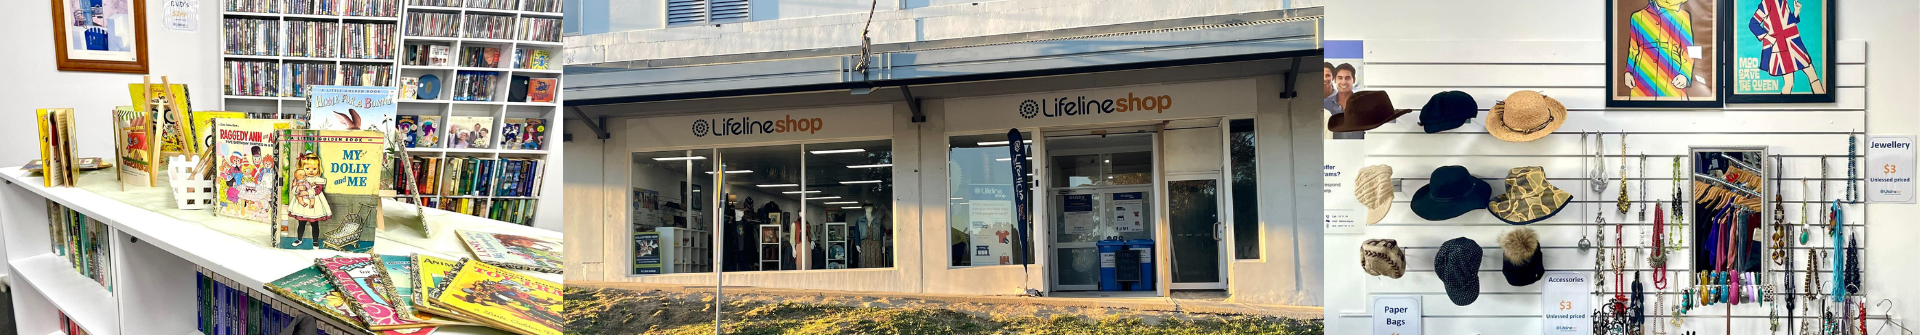 Lifeline Shop Morisset